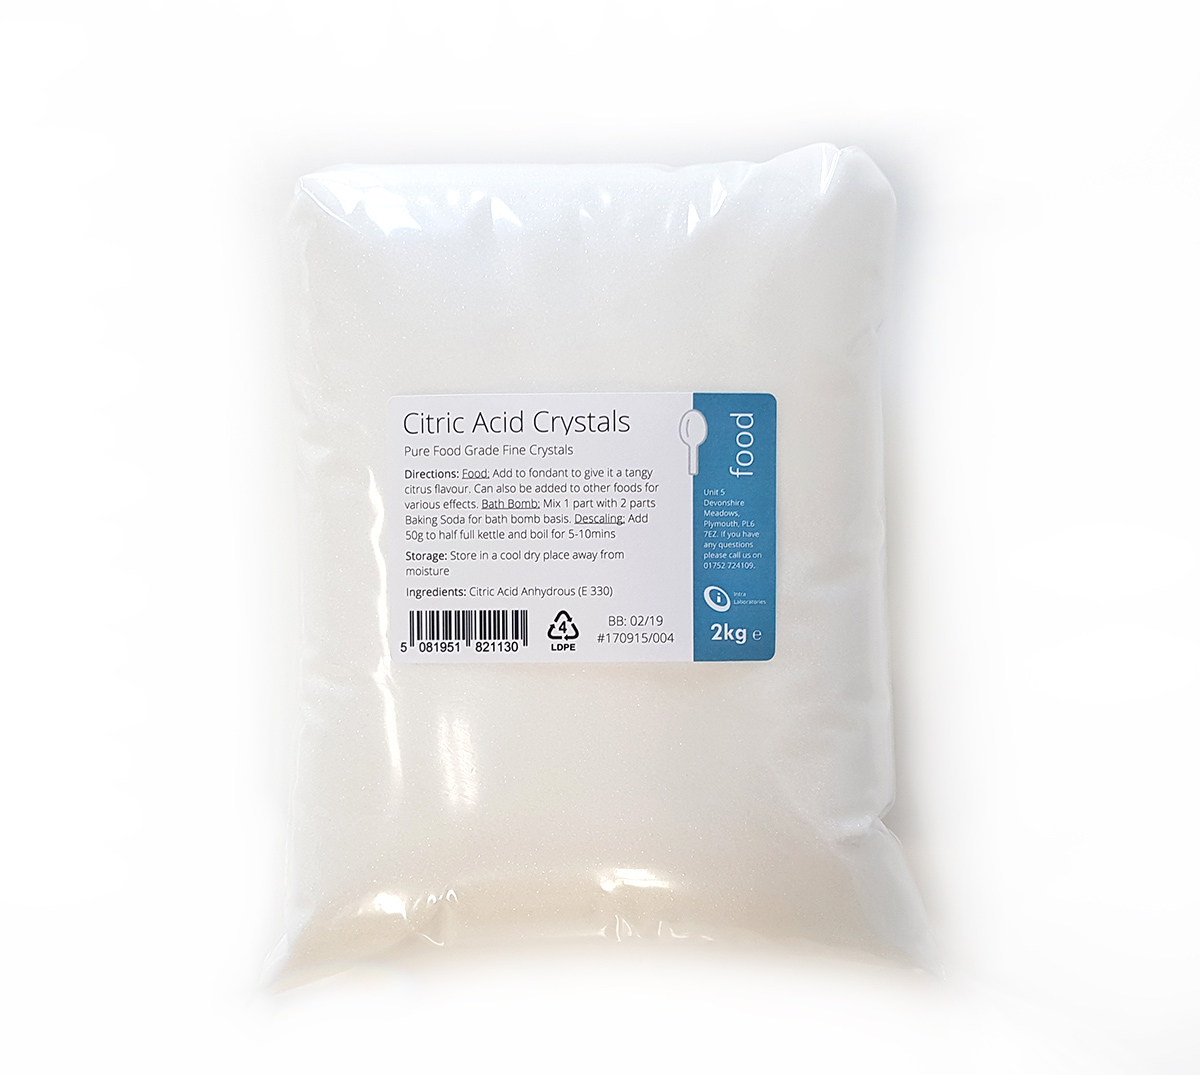 2kg - Citric Acid Crystals